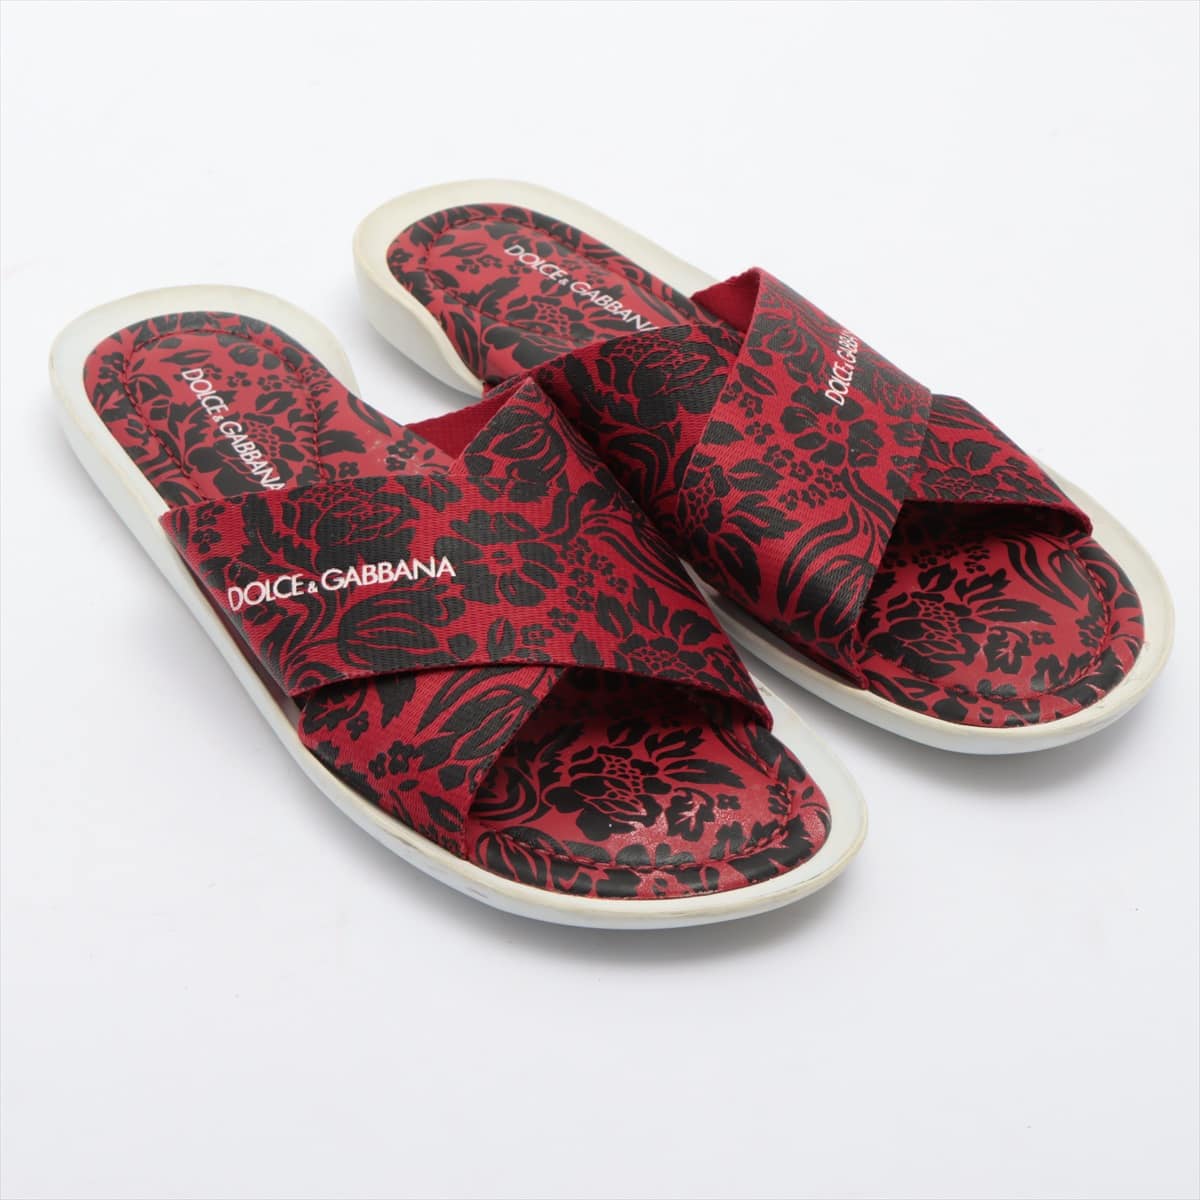 Dolce & Gabbana Fabric Sandals 6 Men's Red Botanical pattern